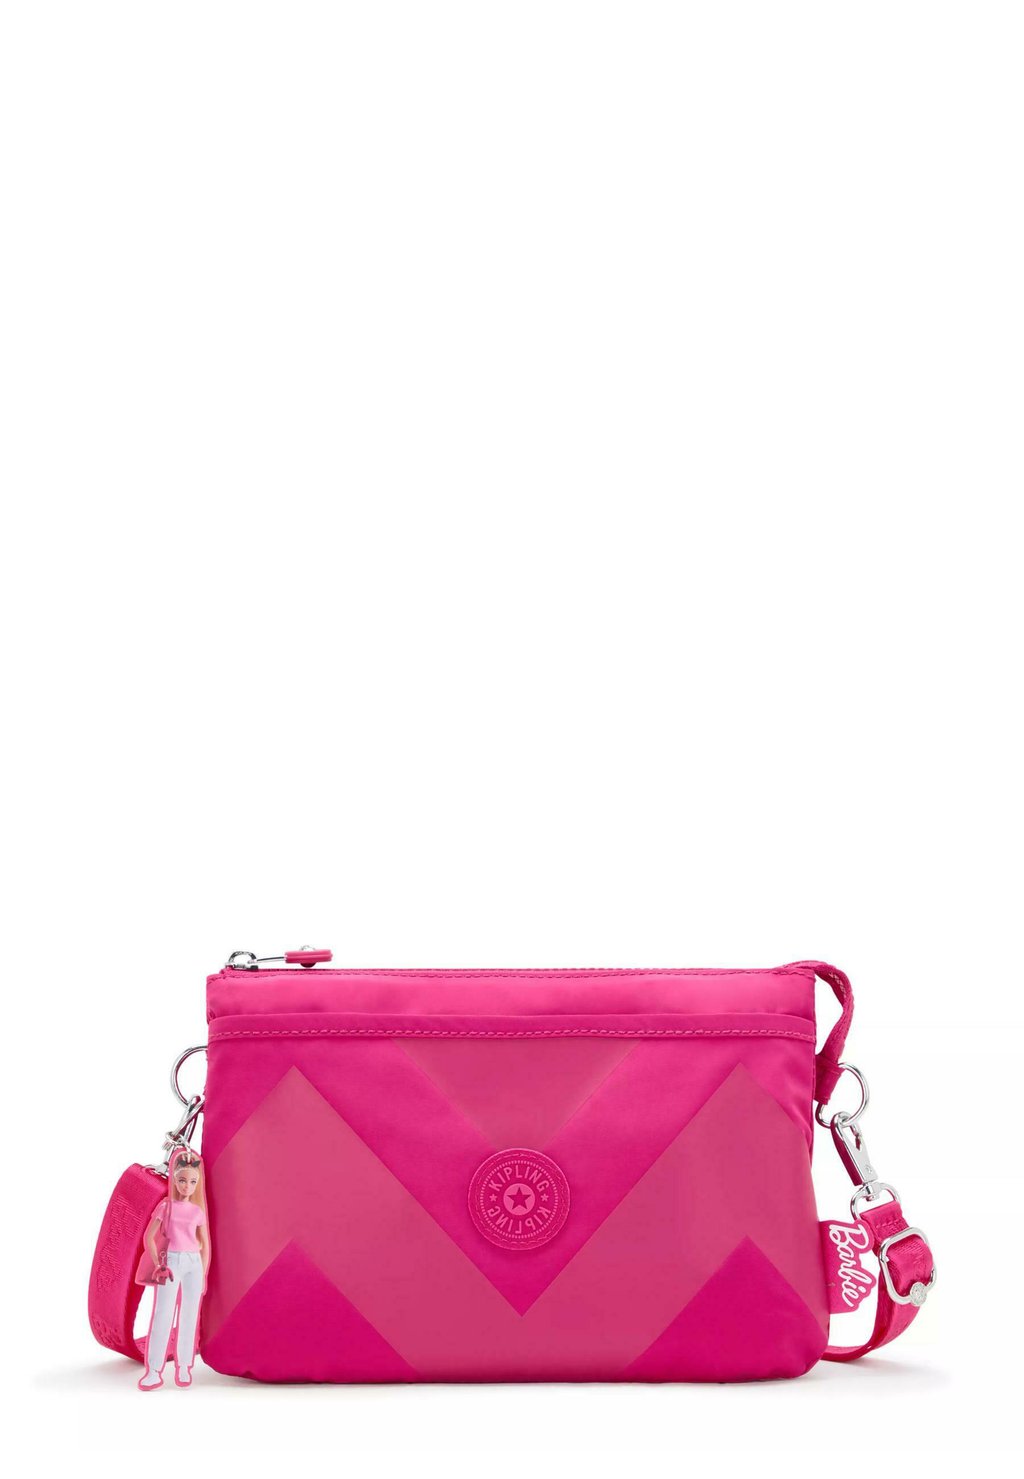 Сумка через плечо RIRI X BARBIE Kipling, цвет power pink сумка через плечо aras kipling цвет valentine pink